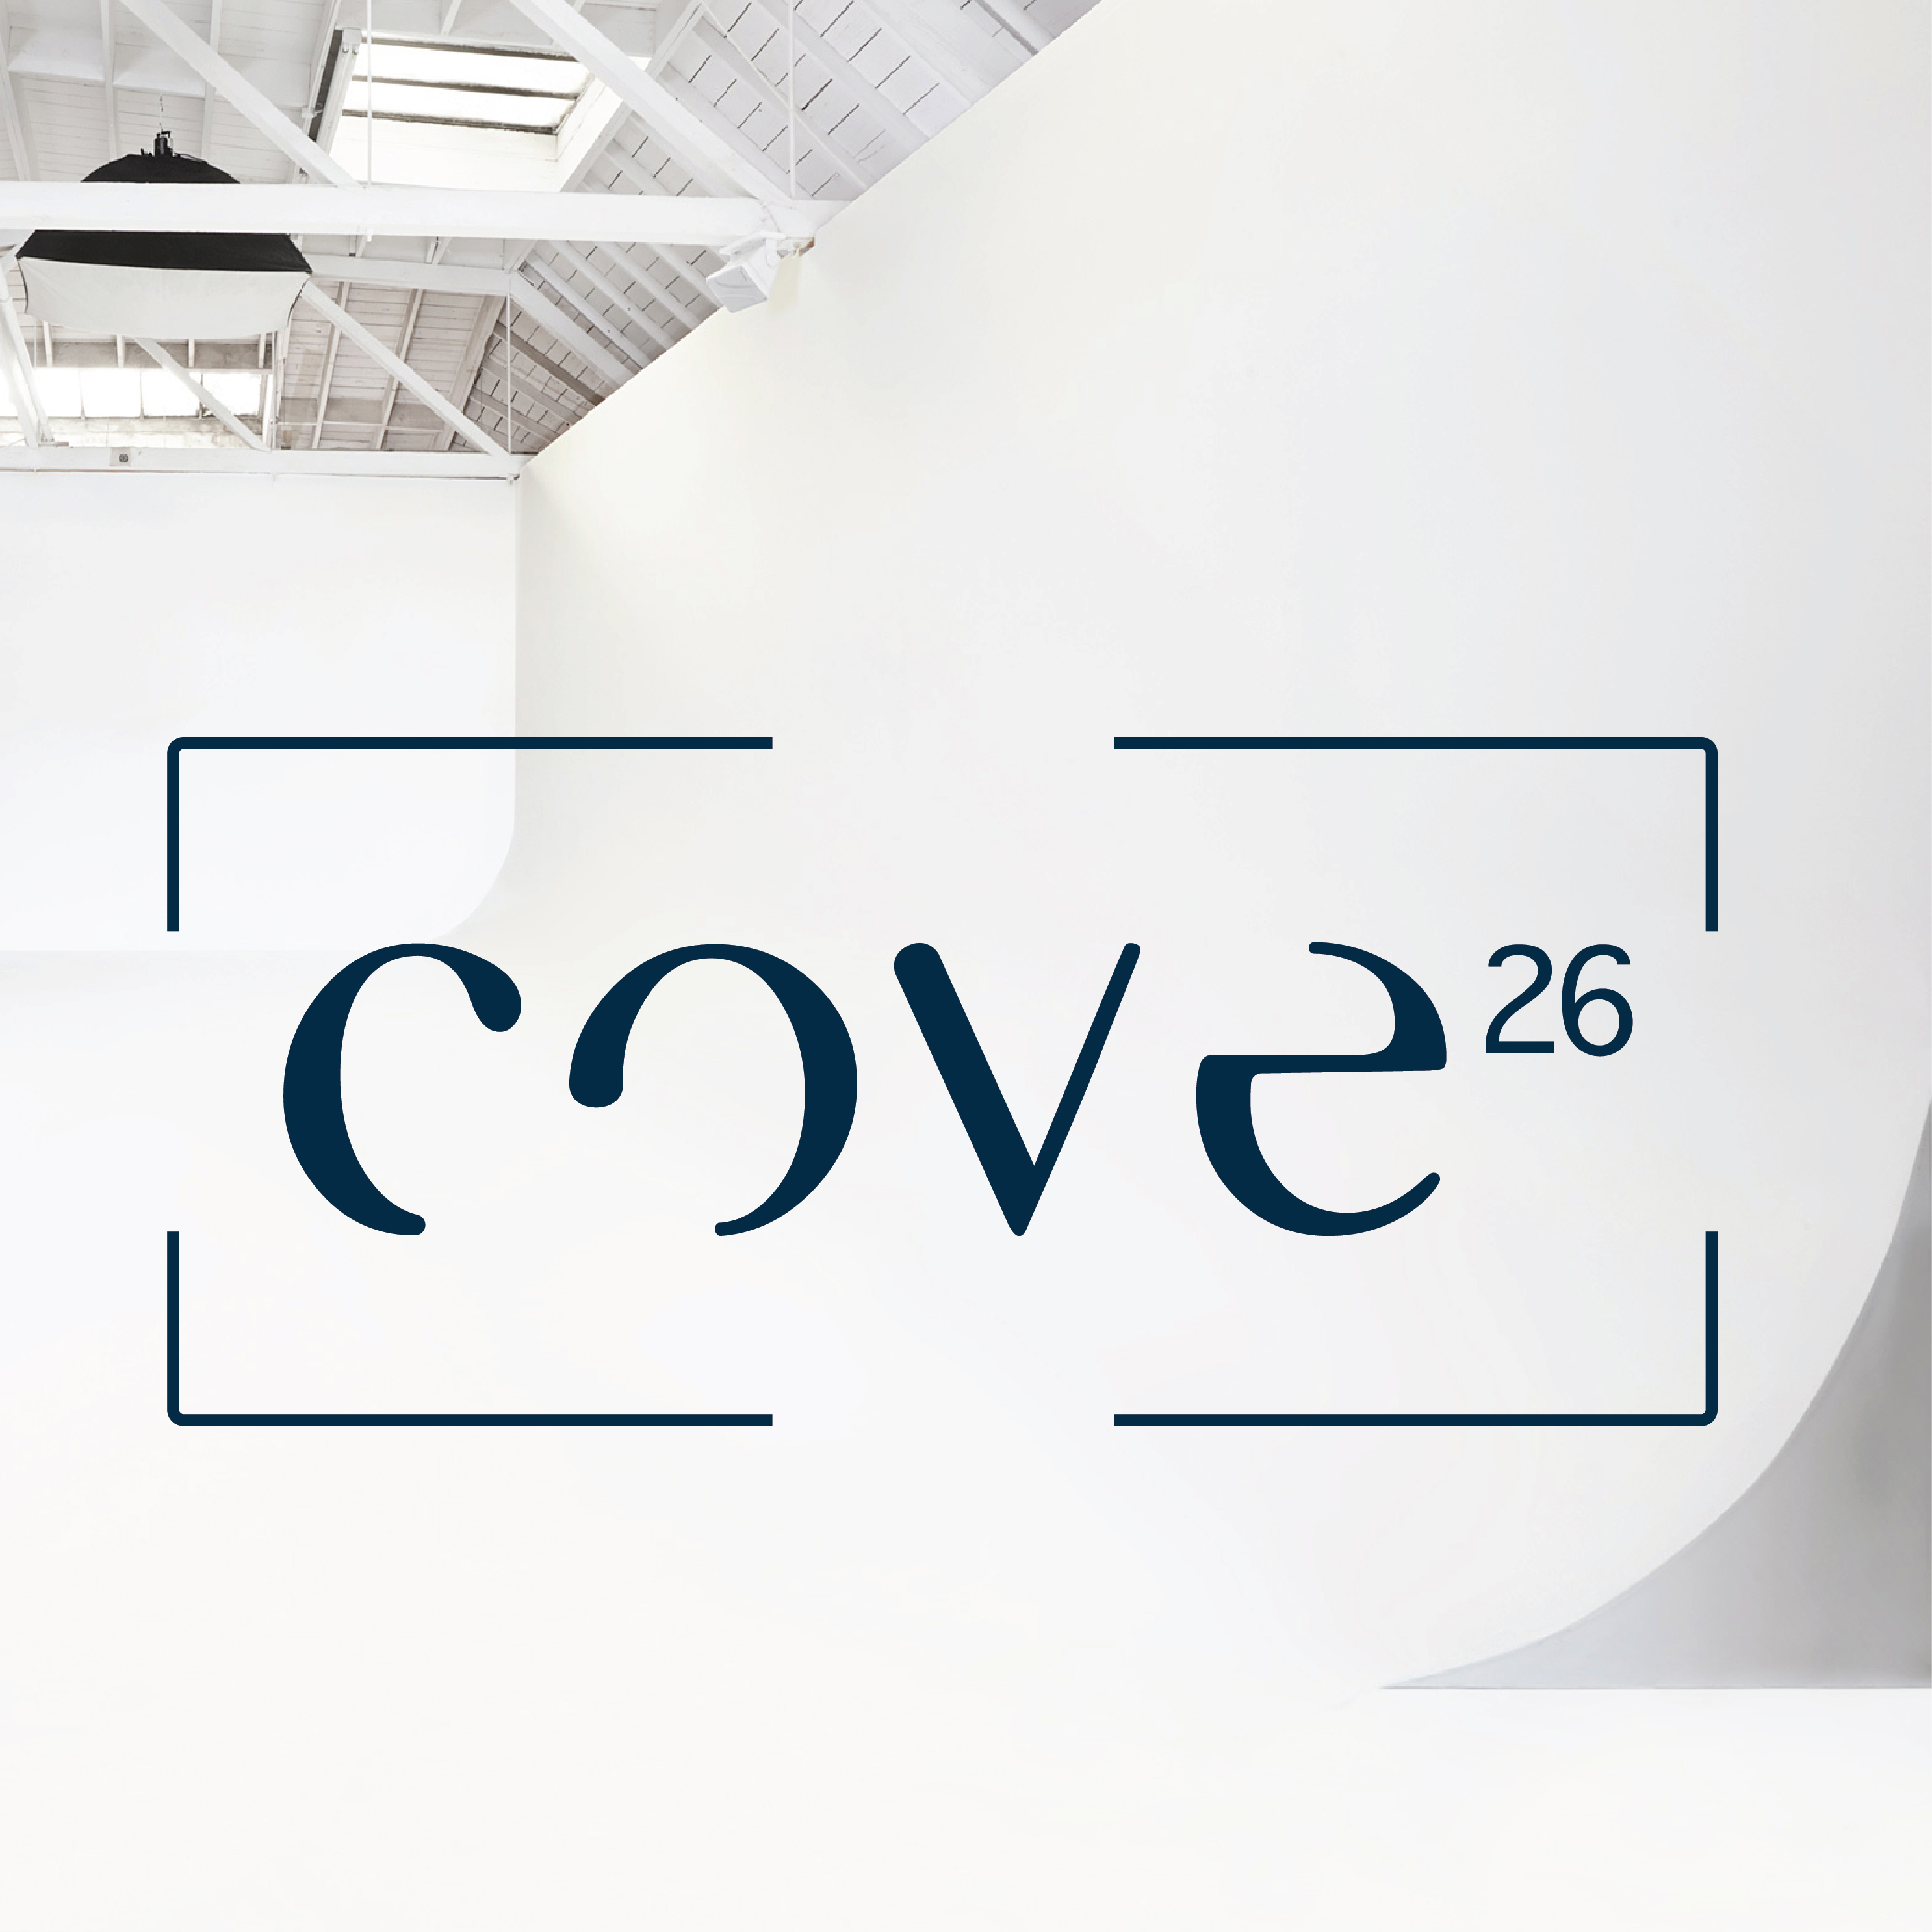 Cove26